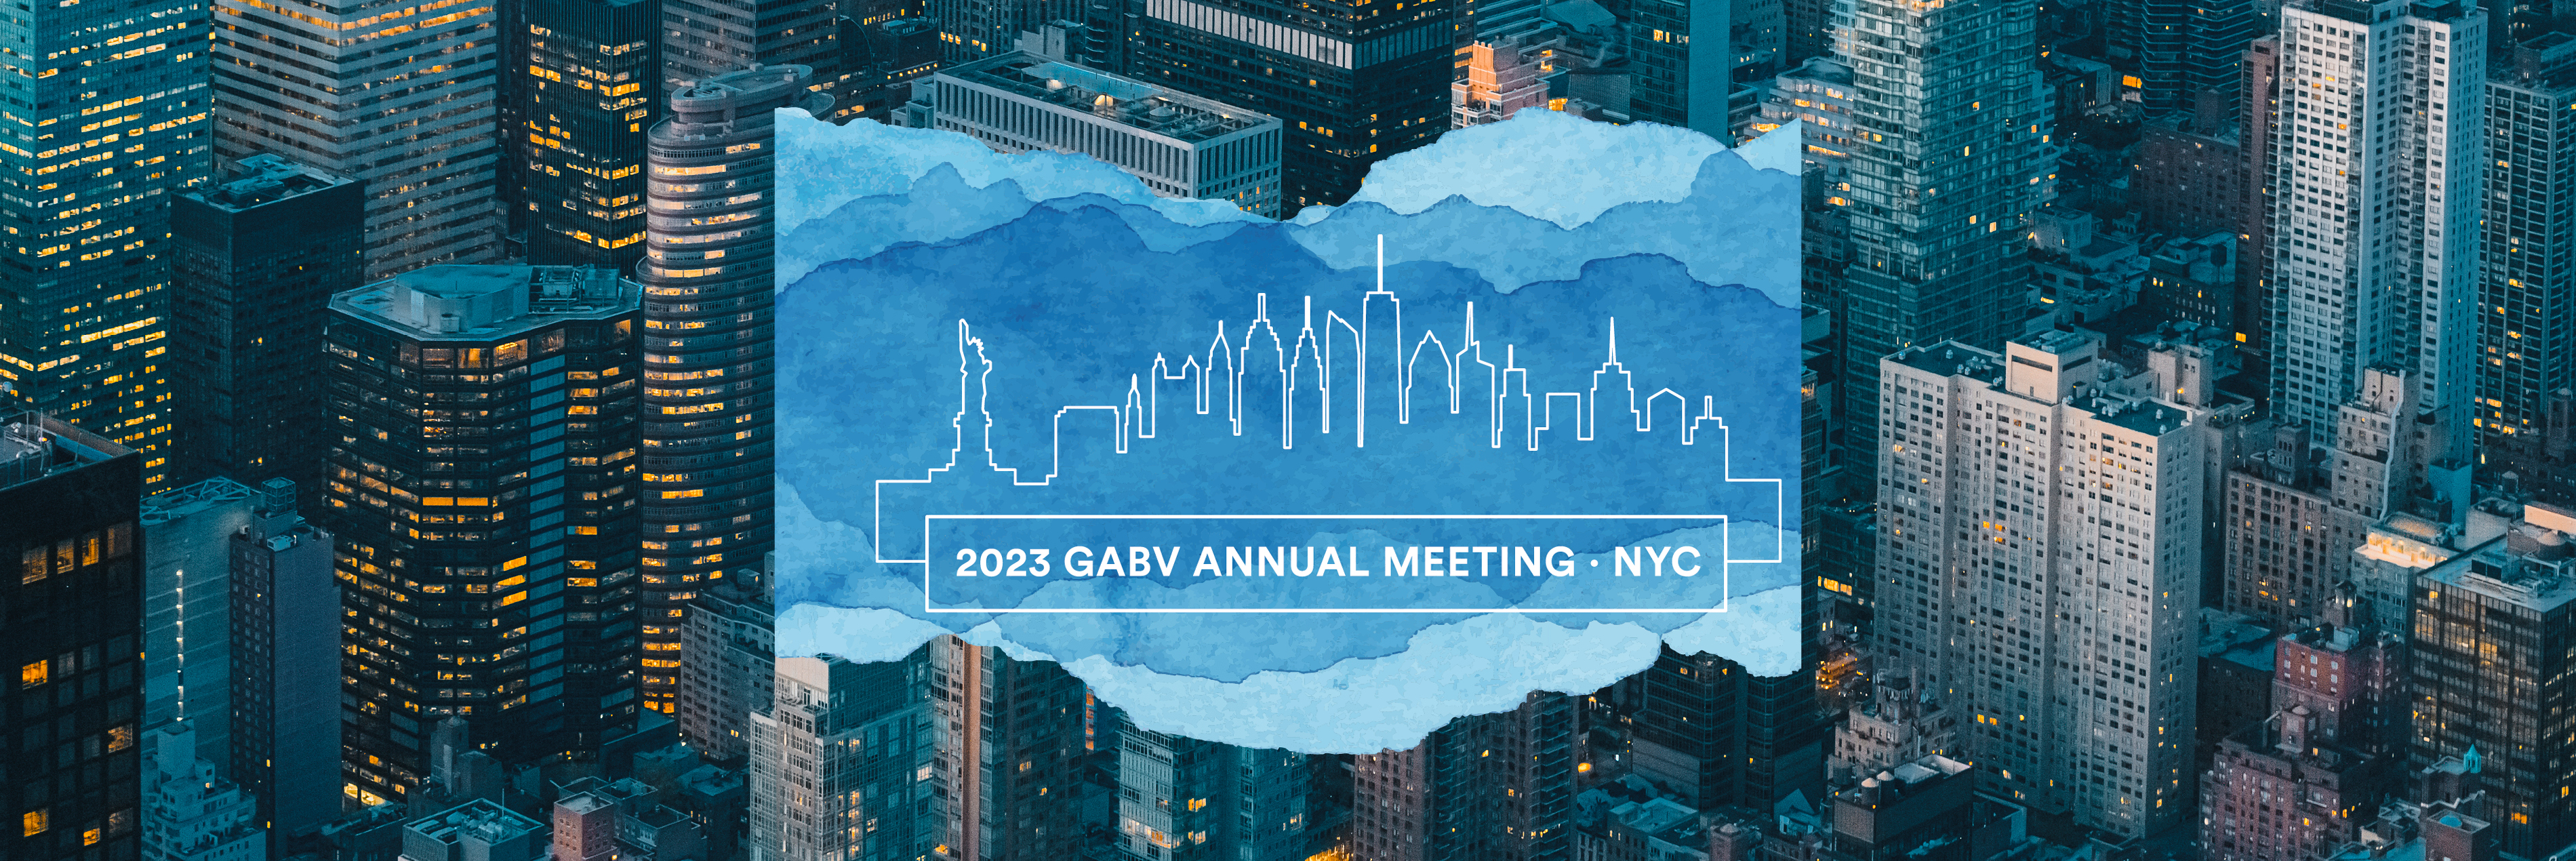 GABV Conference Banner